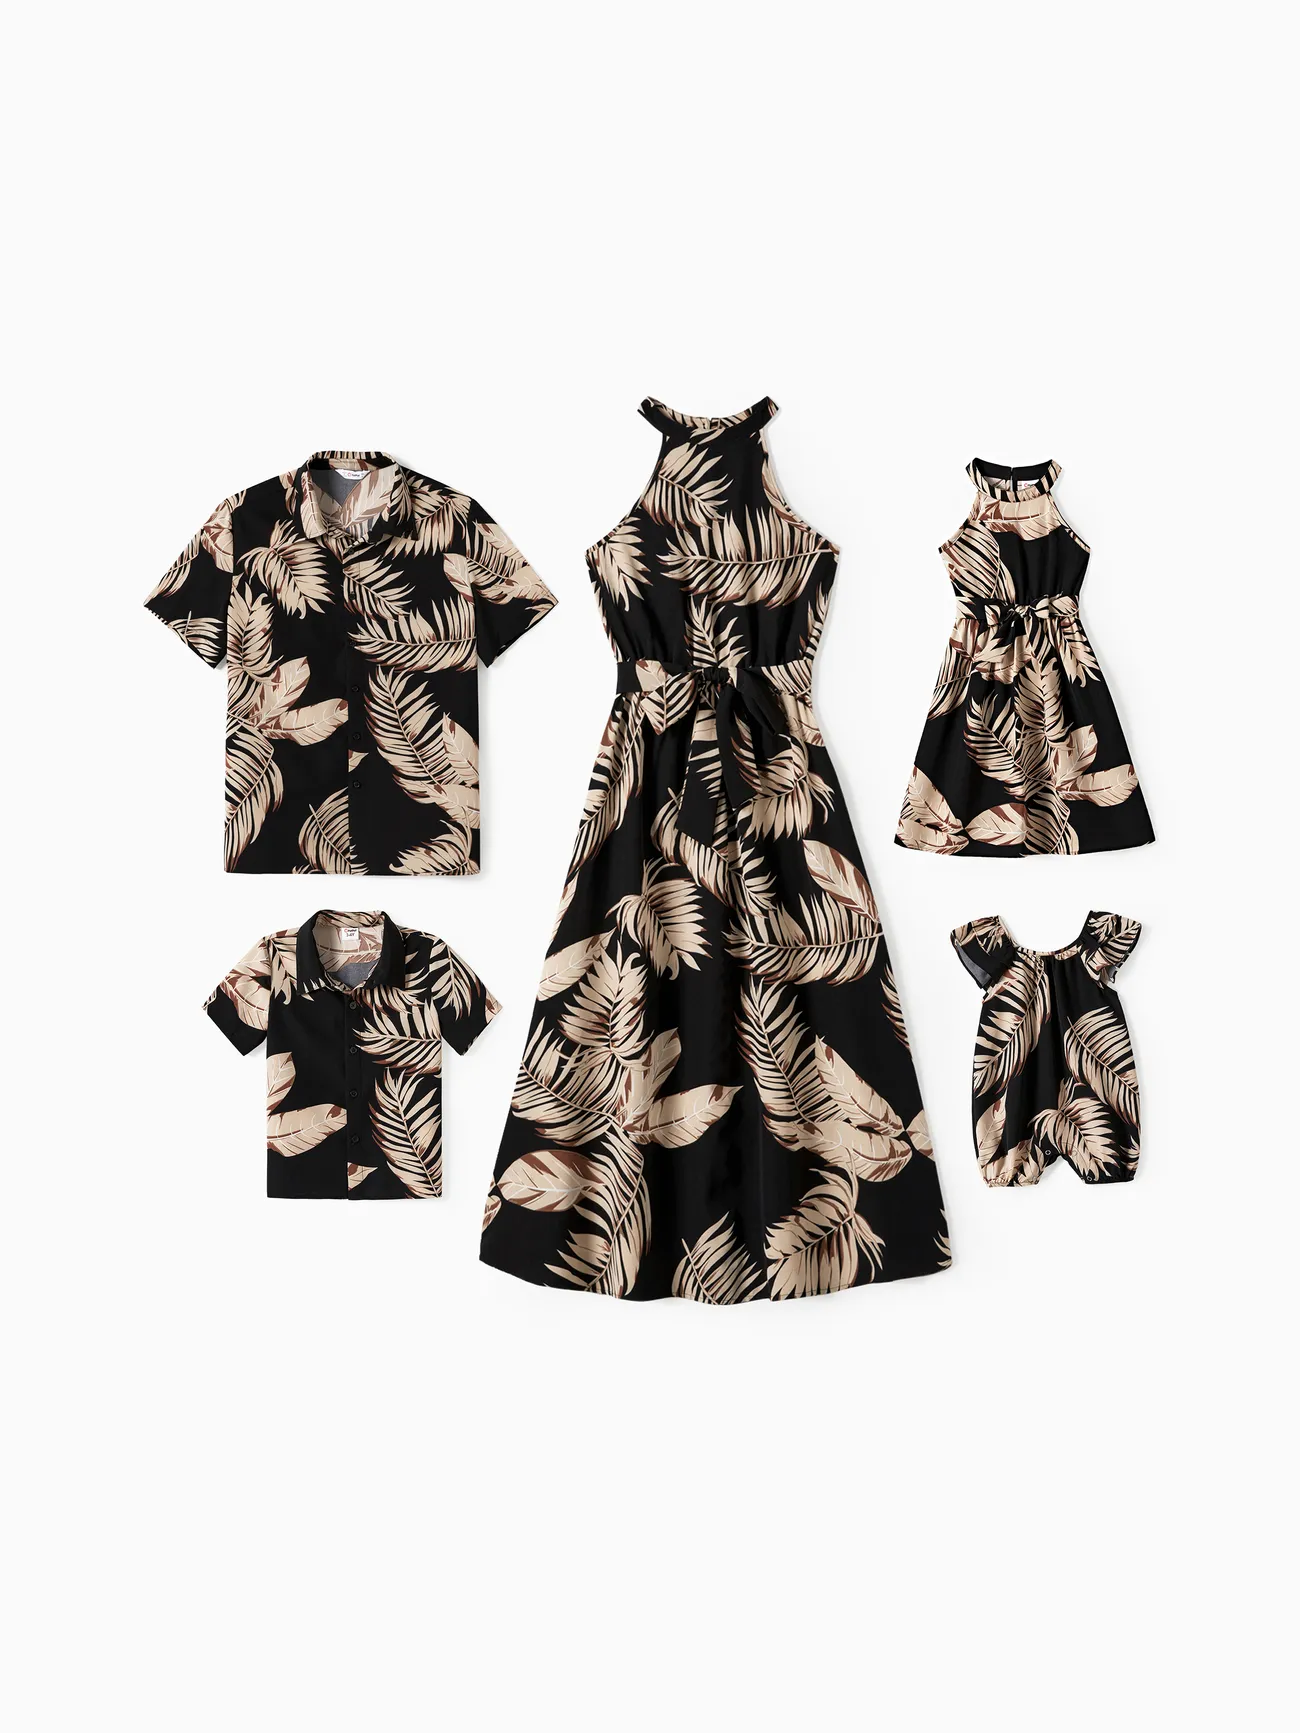 Family Matching Solid Leaf Sleeveless Halter Dresses And Short Sleeve Tops Sets Black big image 1